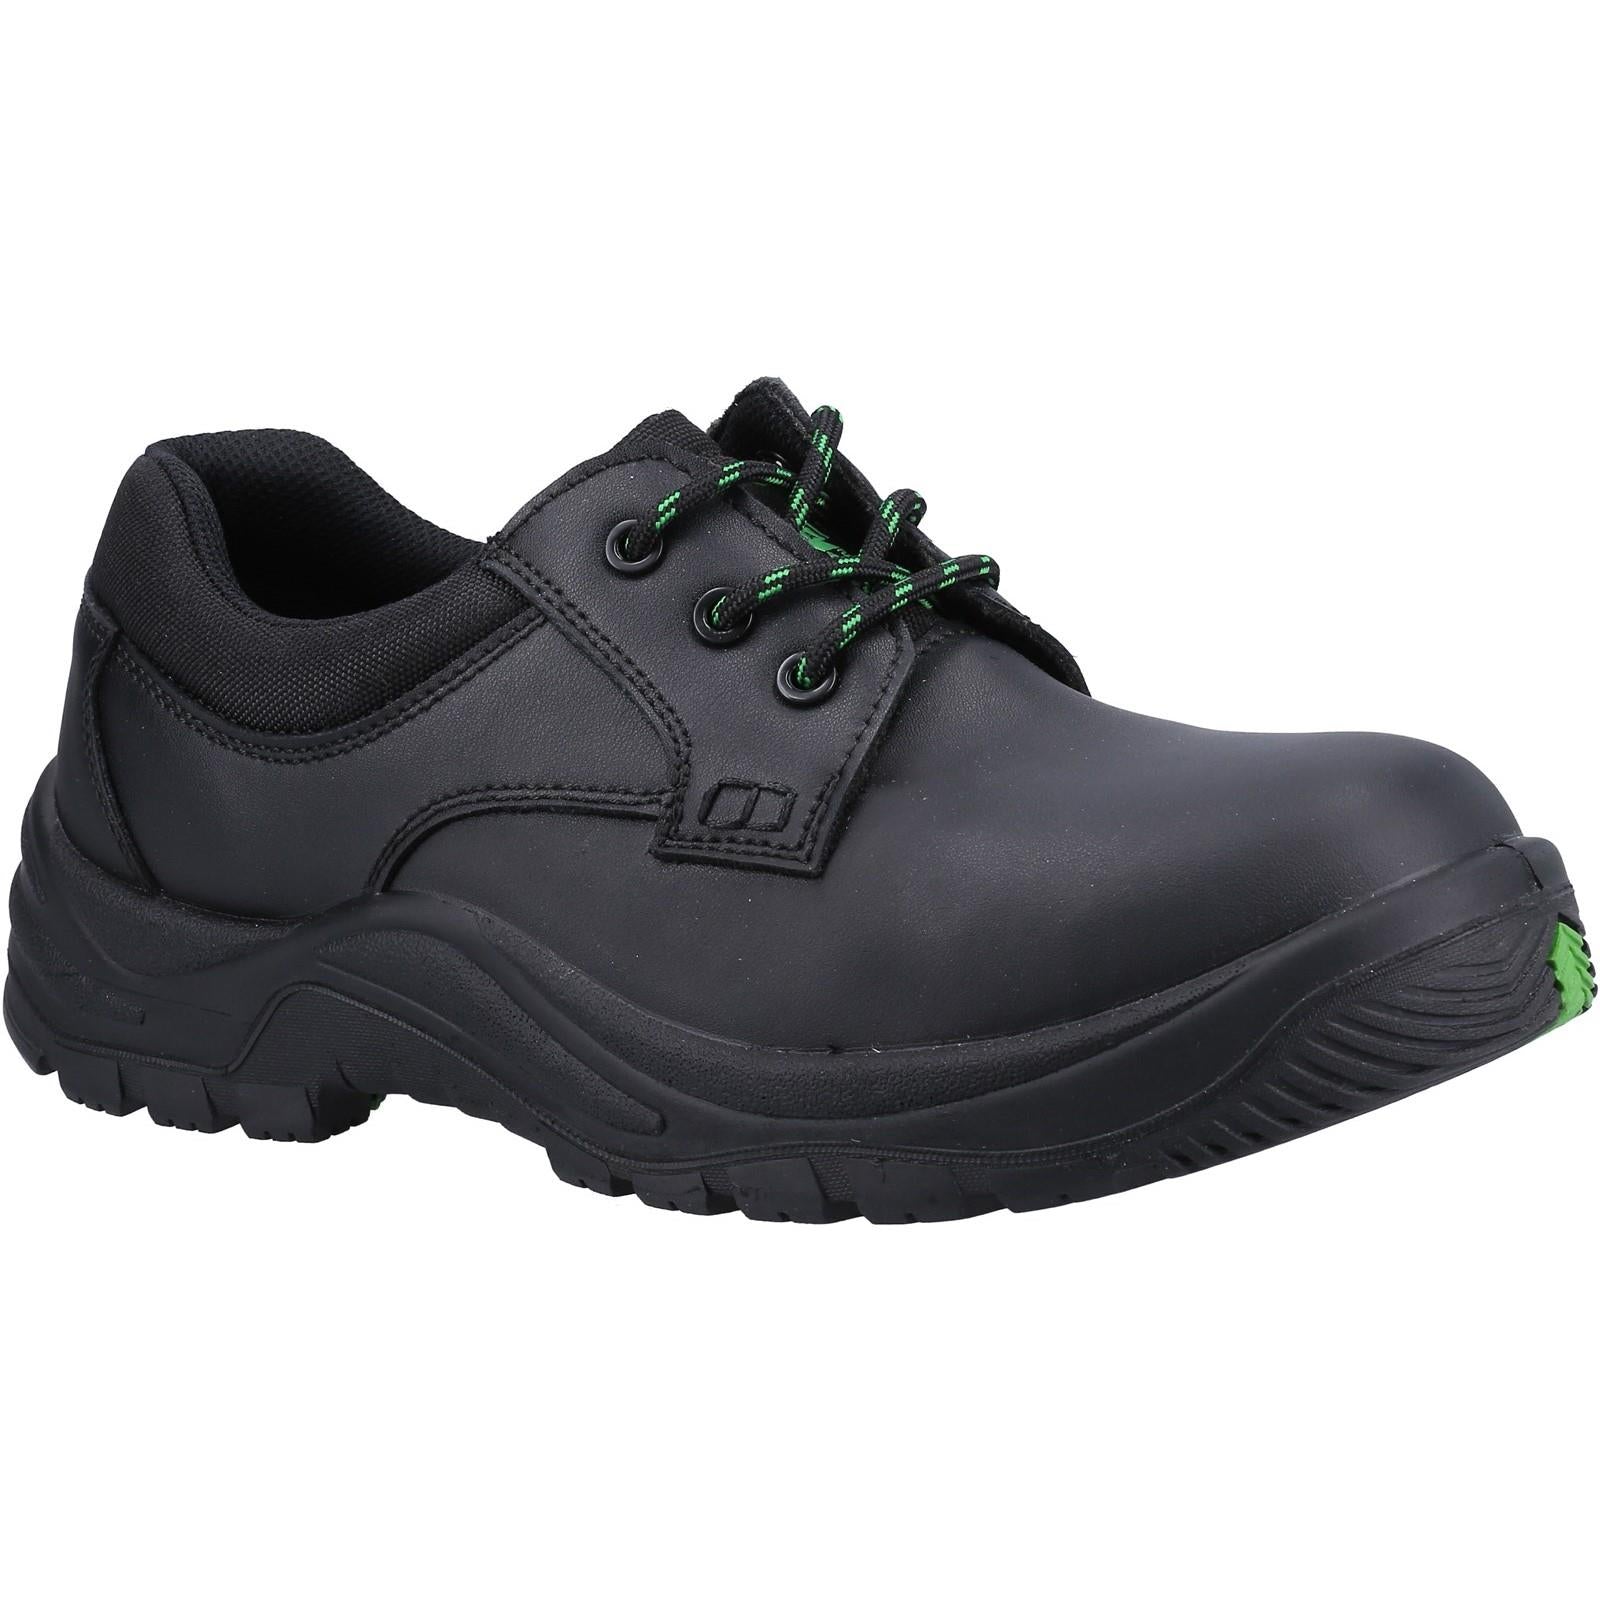 Amblers AS504 ASPEN S1P black composite toe/midsole lace up work safety shoes